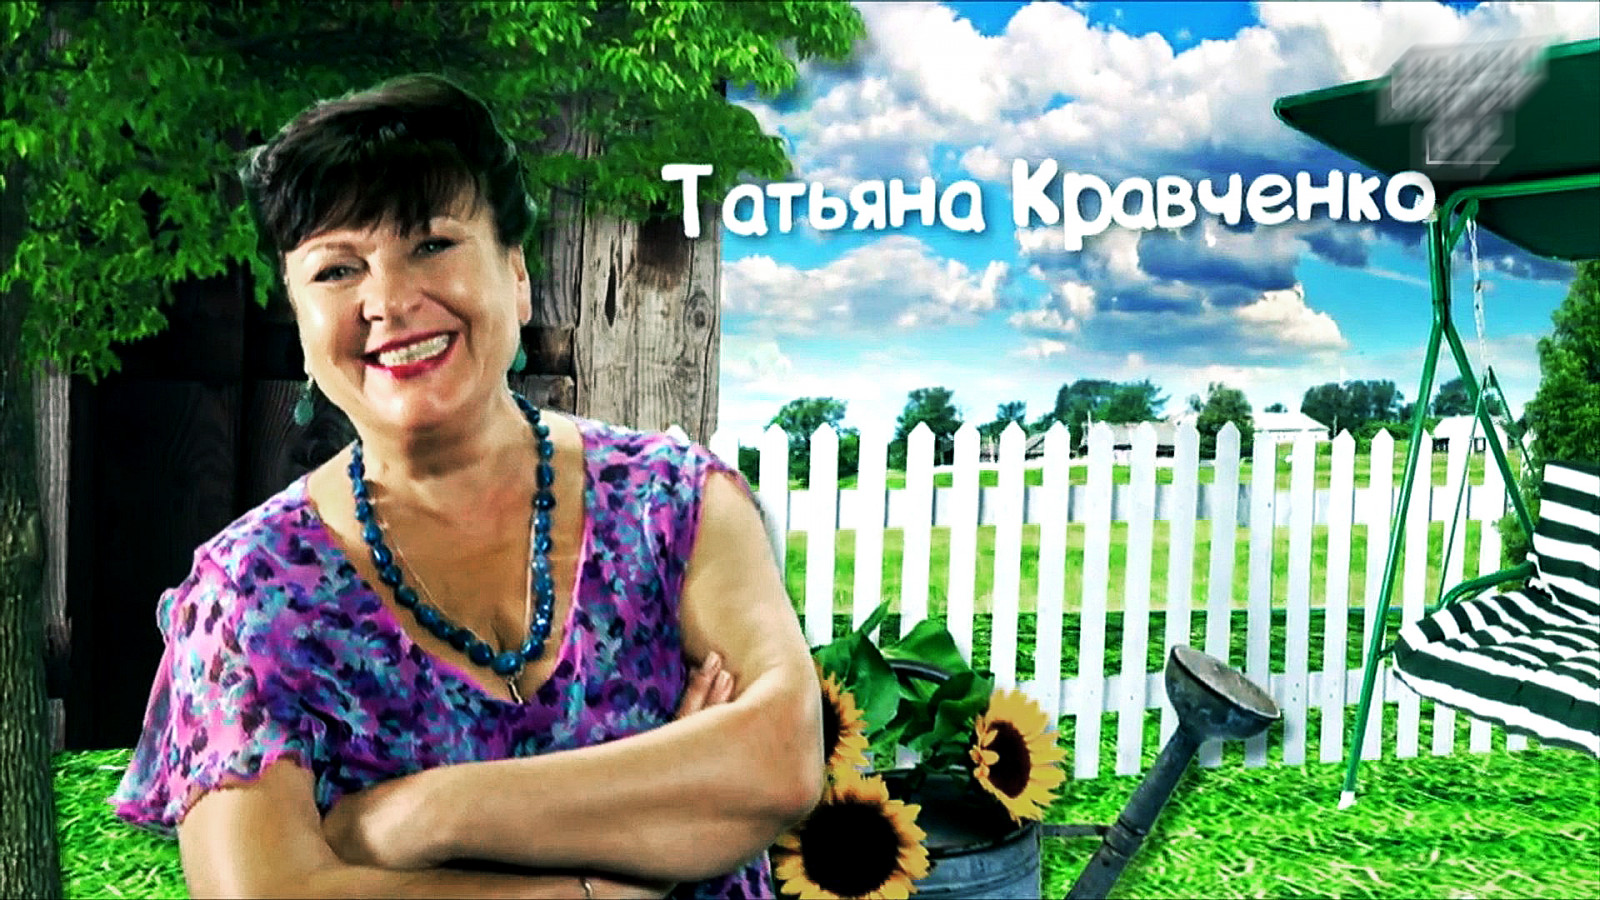 Татьяна Кравченко (Tatyana Kravchenko)